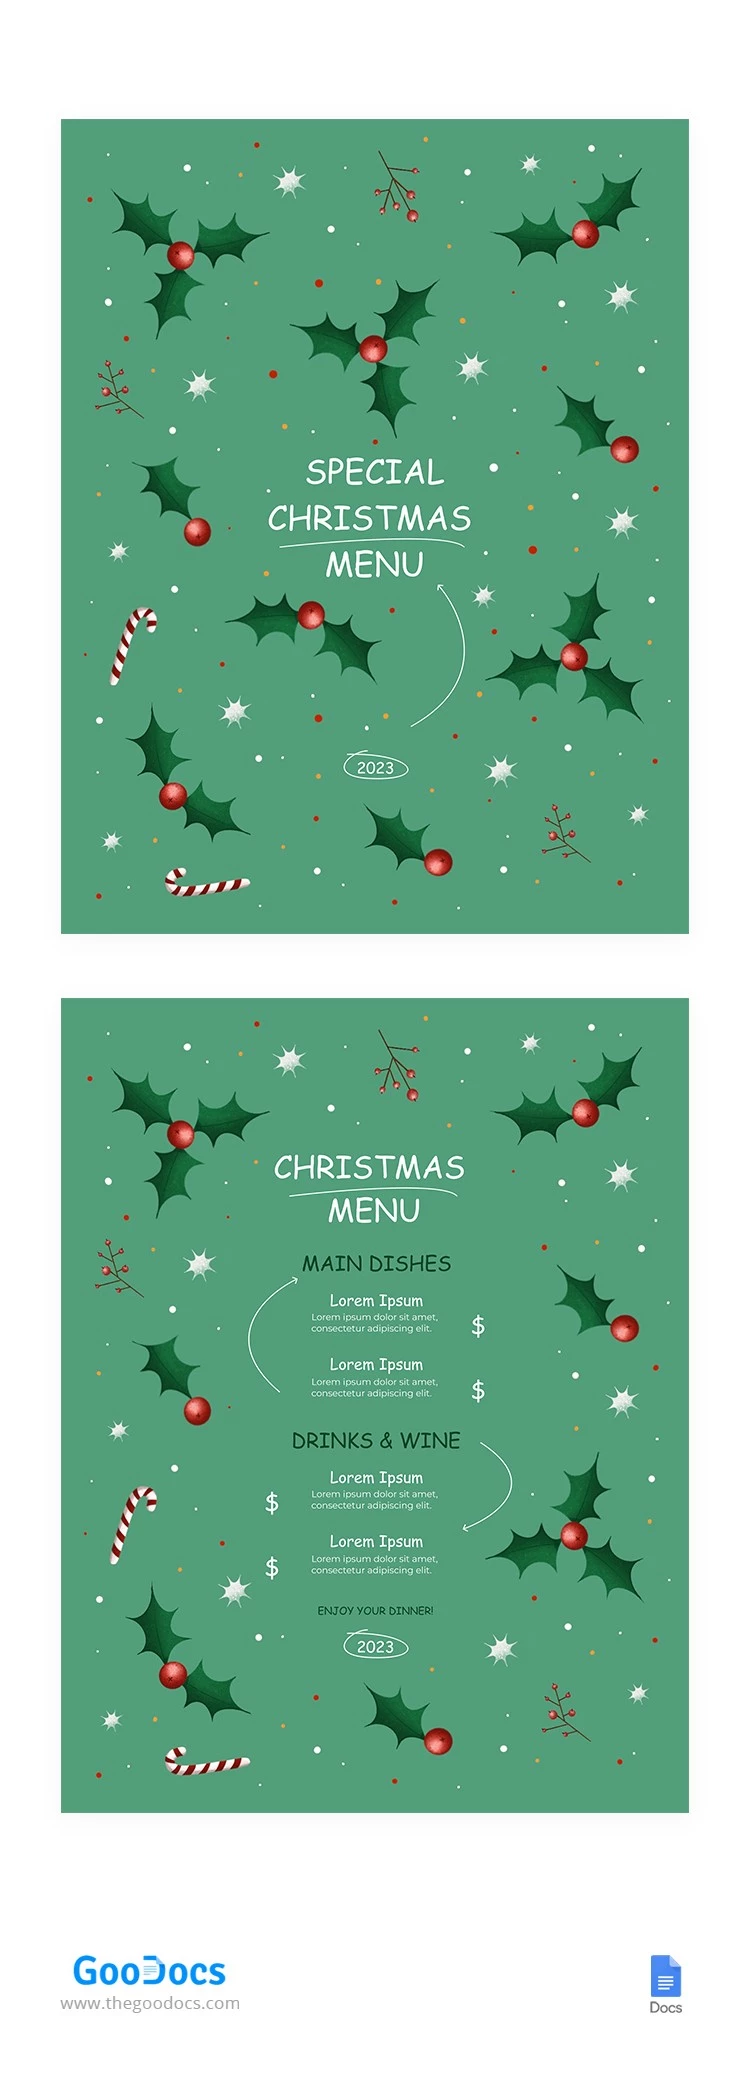 Illustrated Christmas Menu - free Google Docs Template - 10065002